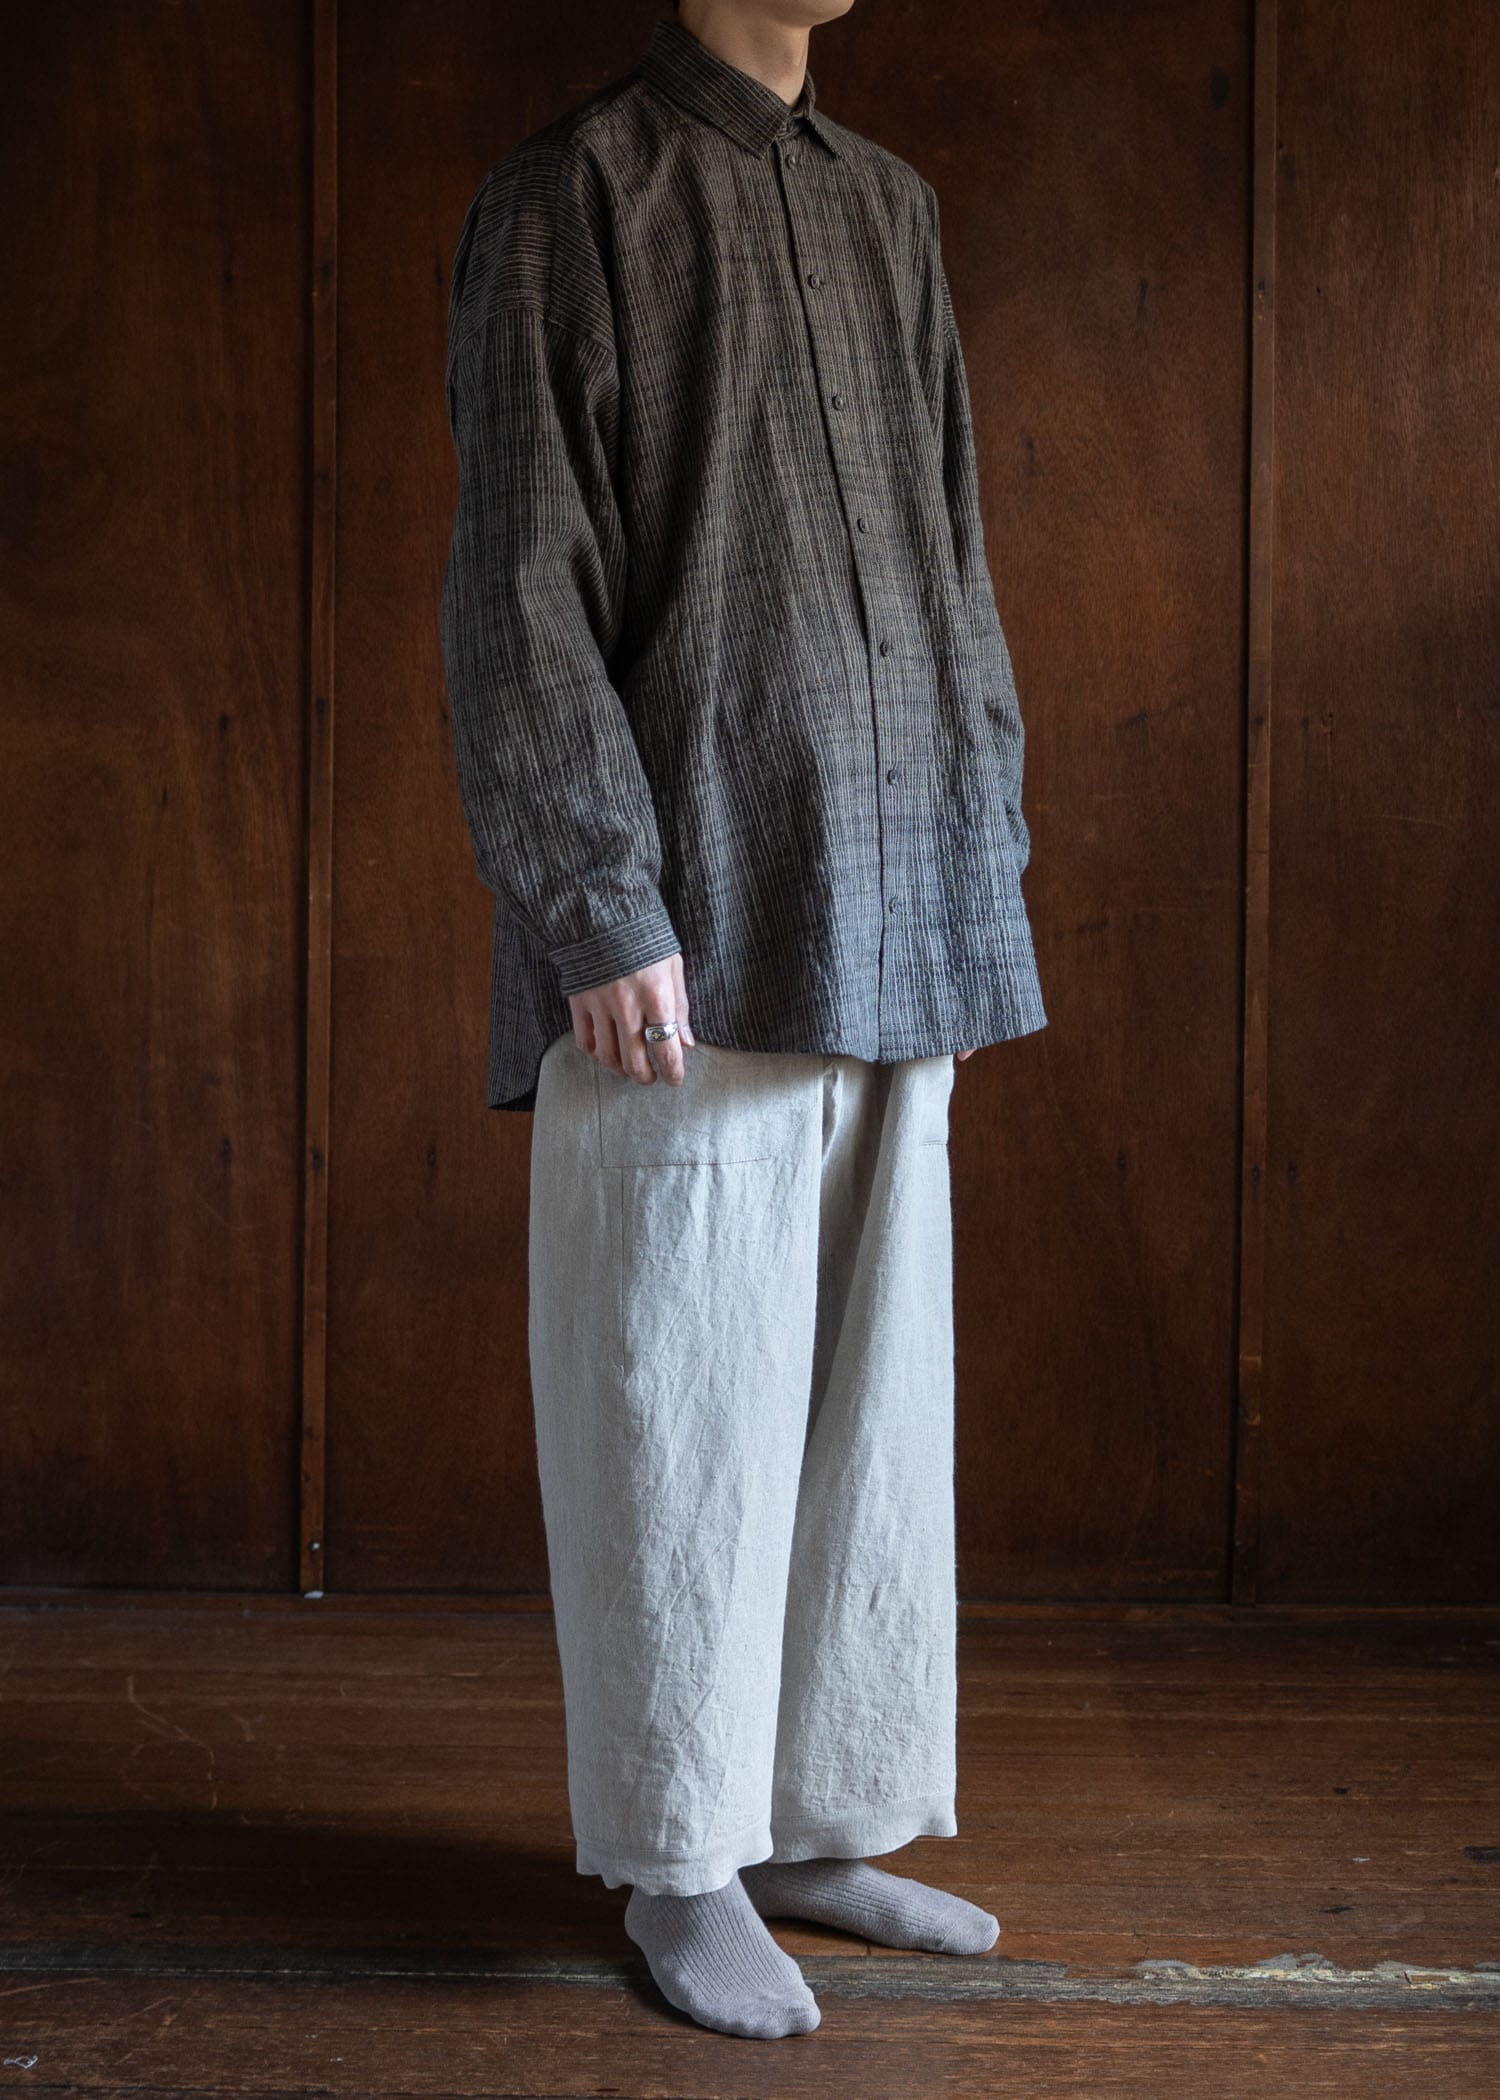 JAN-JAN VAN ESSCHE SHIRT#100 LOOSE DRESS SHIRTCOTTON CLOTH VINTAGE STRIPED